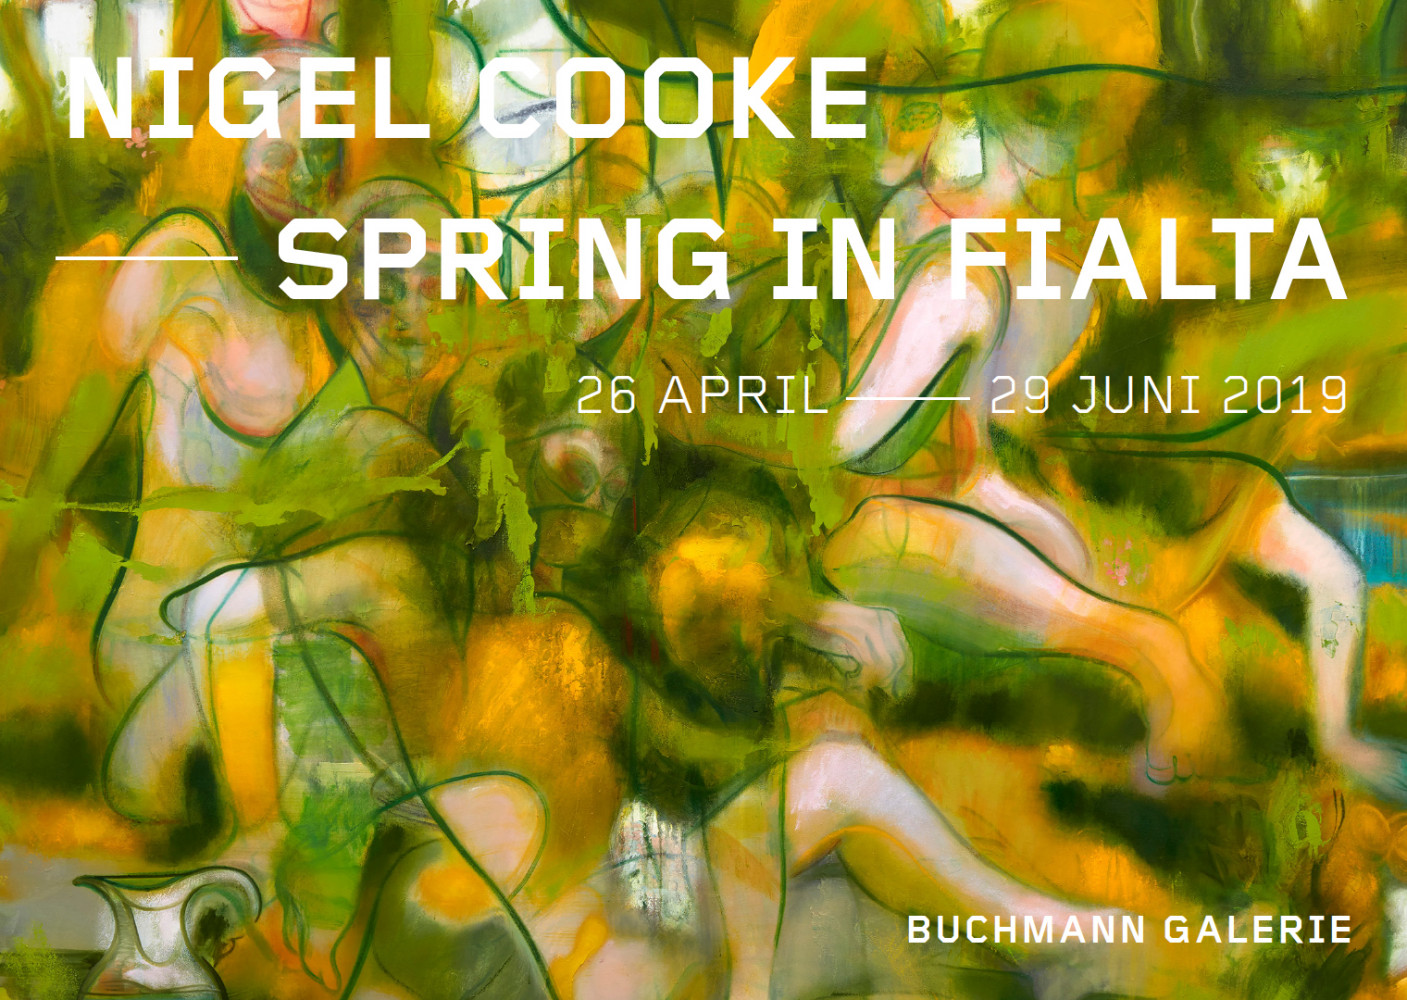 ‘Nigel Cooke – Spring in Fialta’